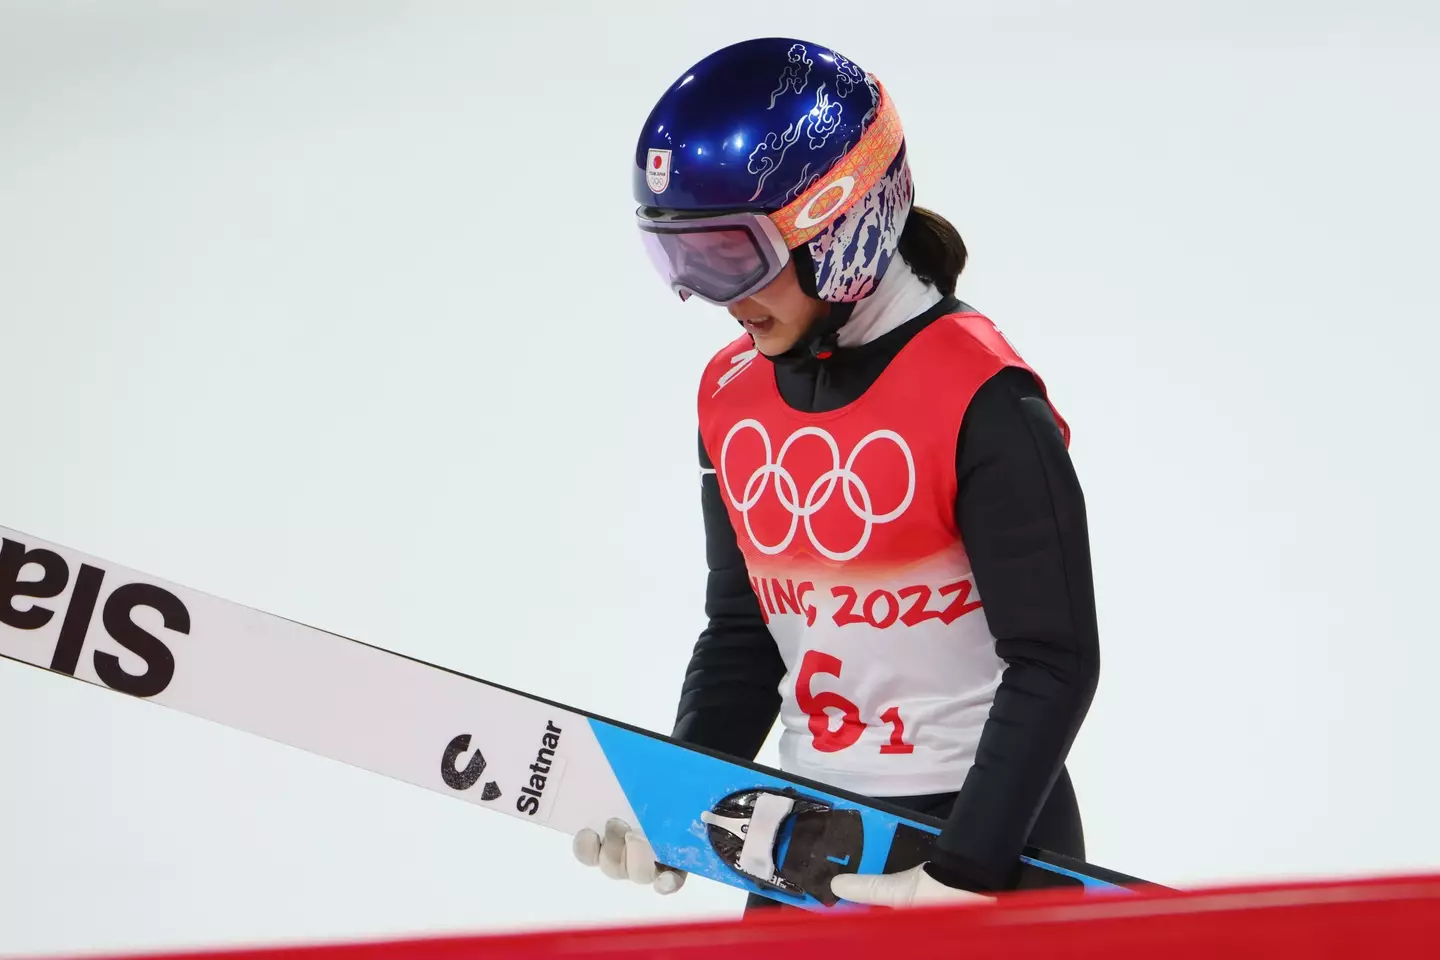 Sara Takanashi was one of the disqualified athletes.